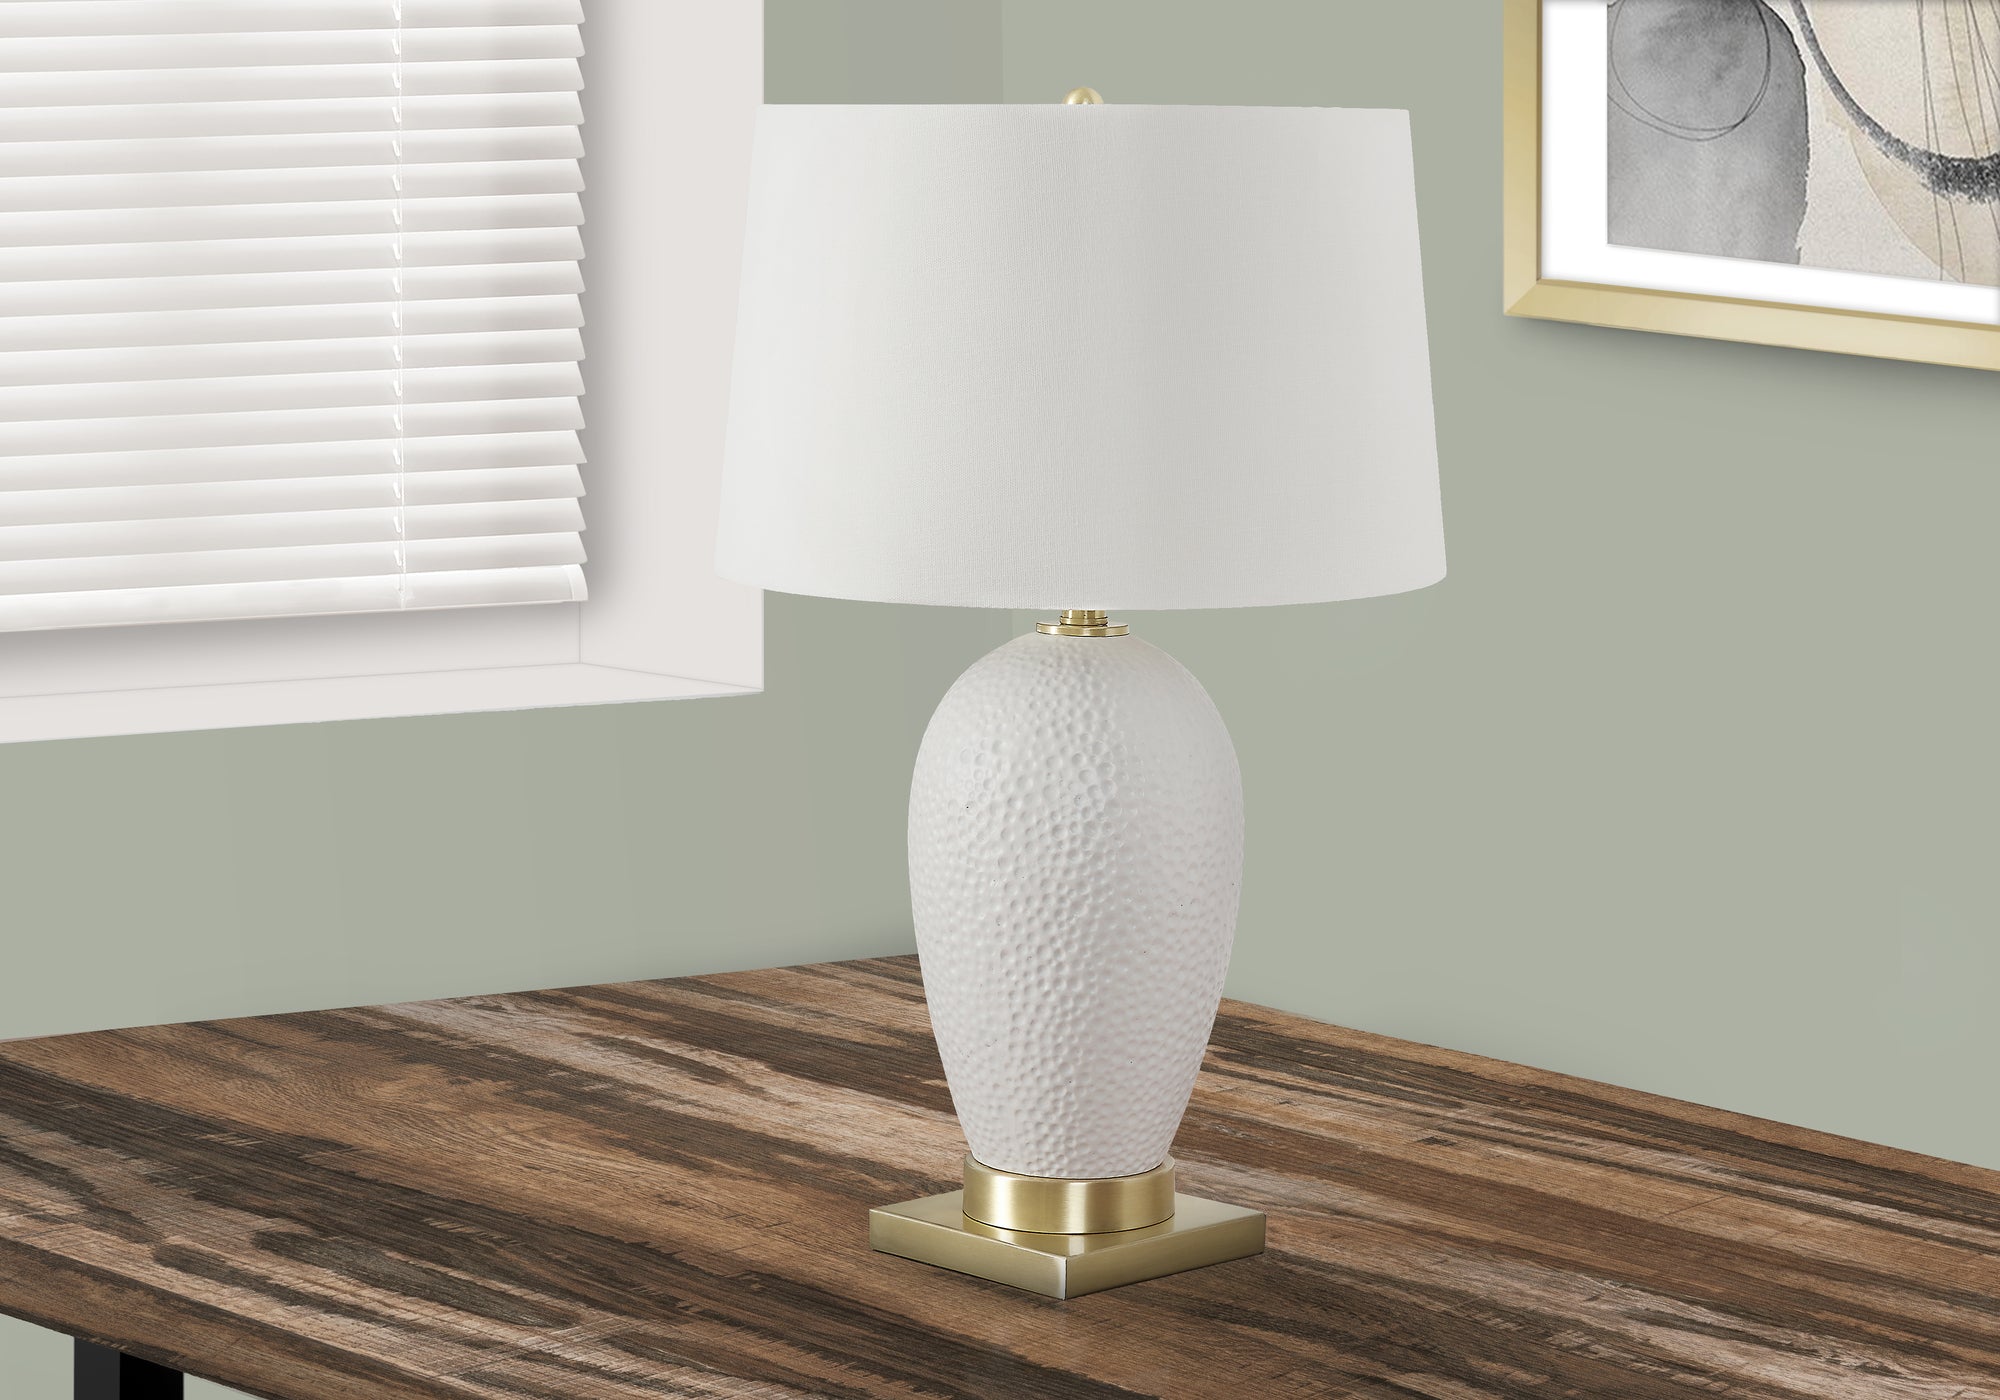 MN-859610    Lighting, 26"H, Table Lamp, White Ceramic, Ivory / Cream Shade, Transitional